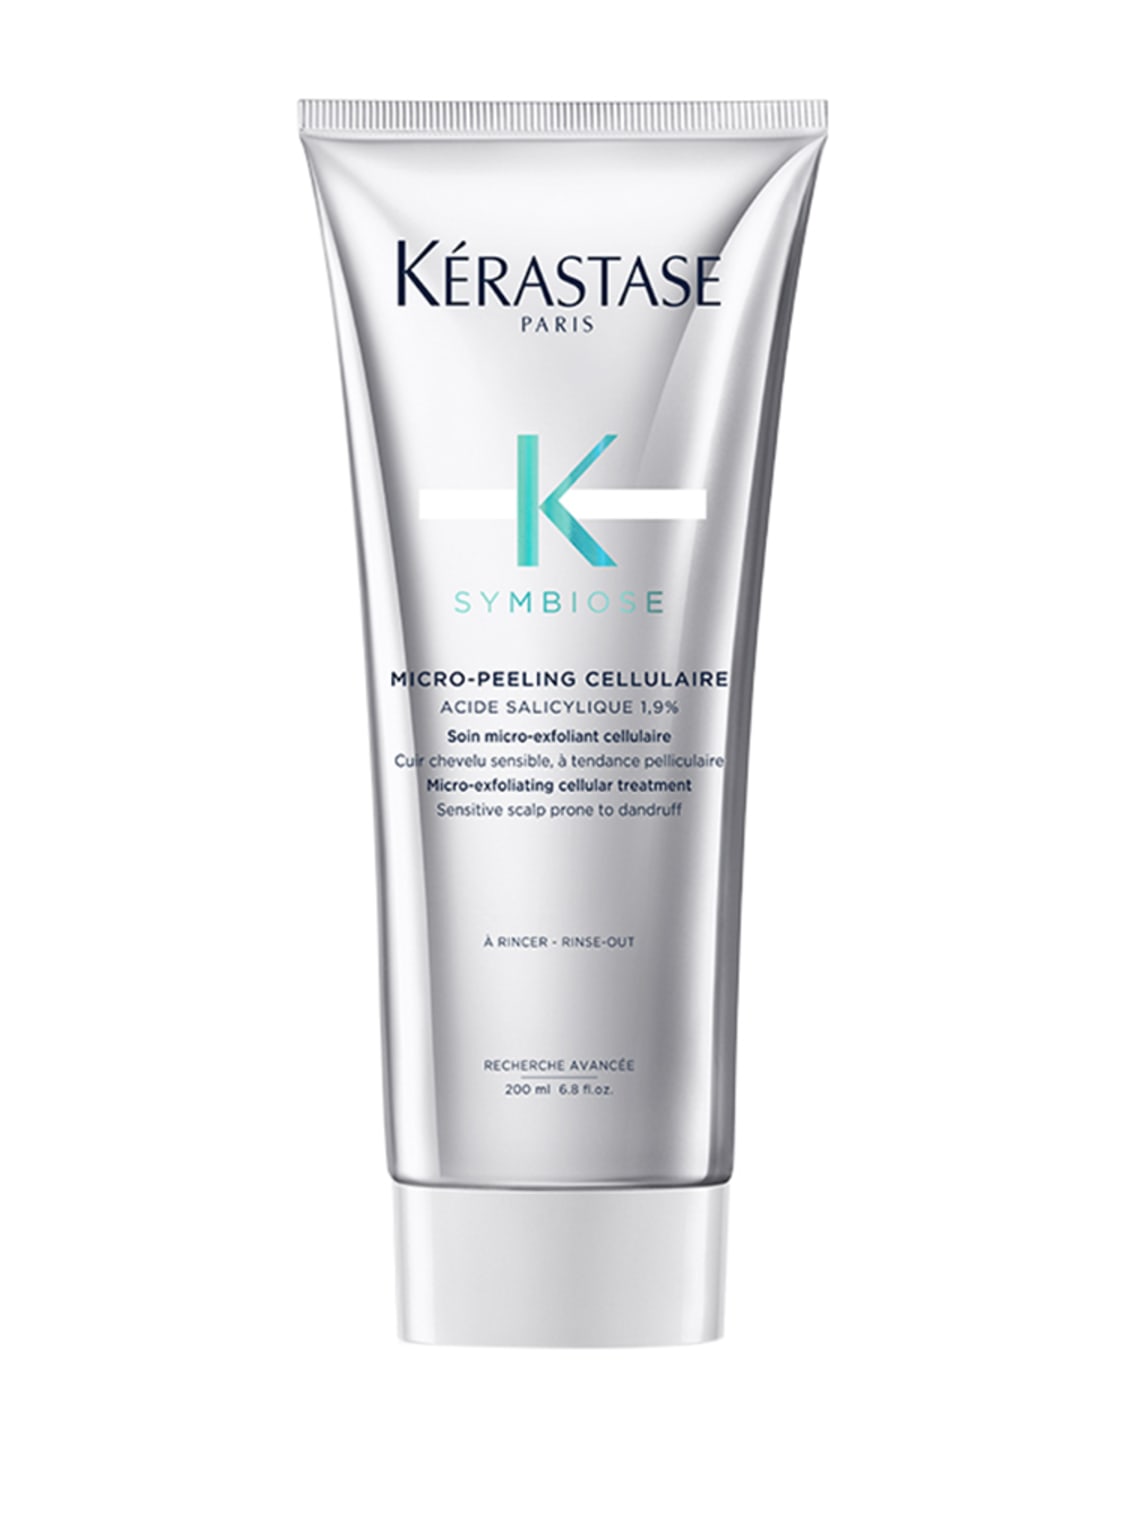 Kérastase Symbiose Micro-Peeling Cellulaire Kopfhautpflege 200 ml von KÉRASTASE